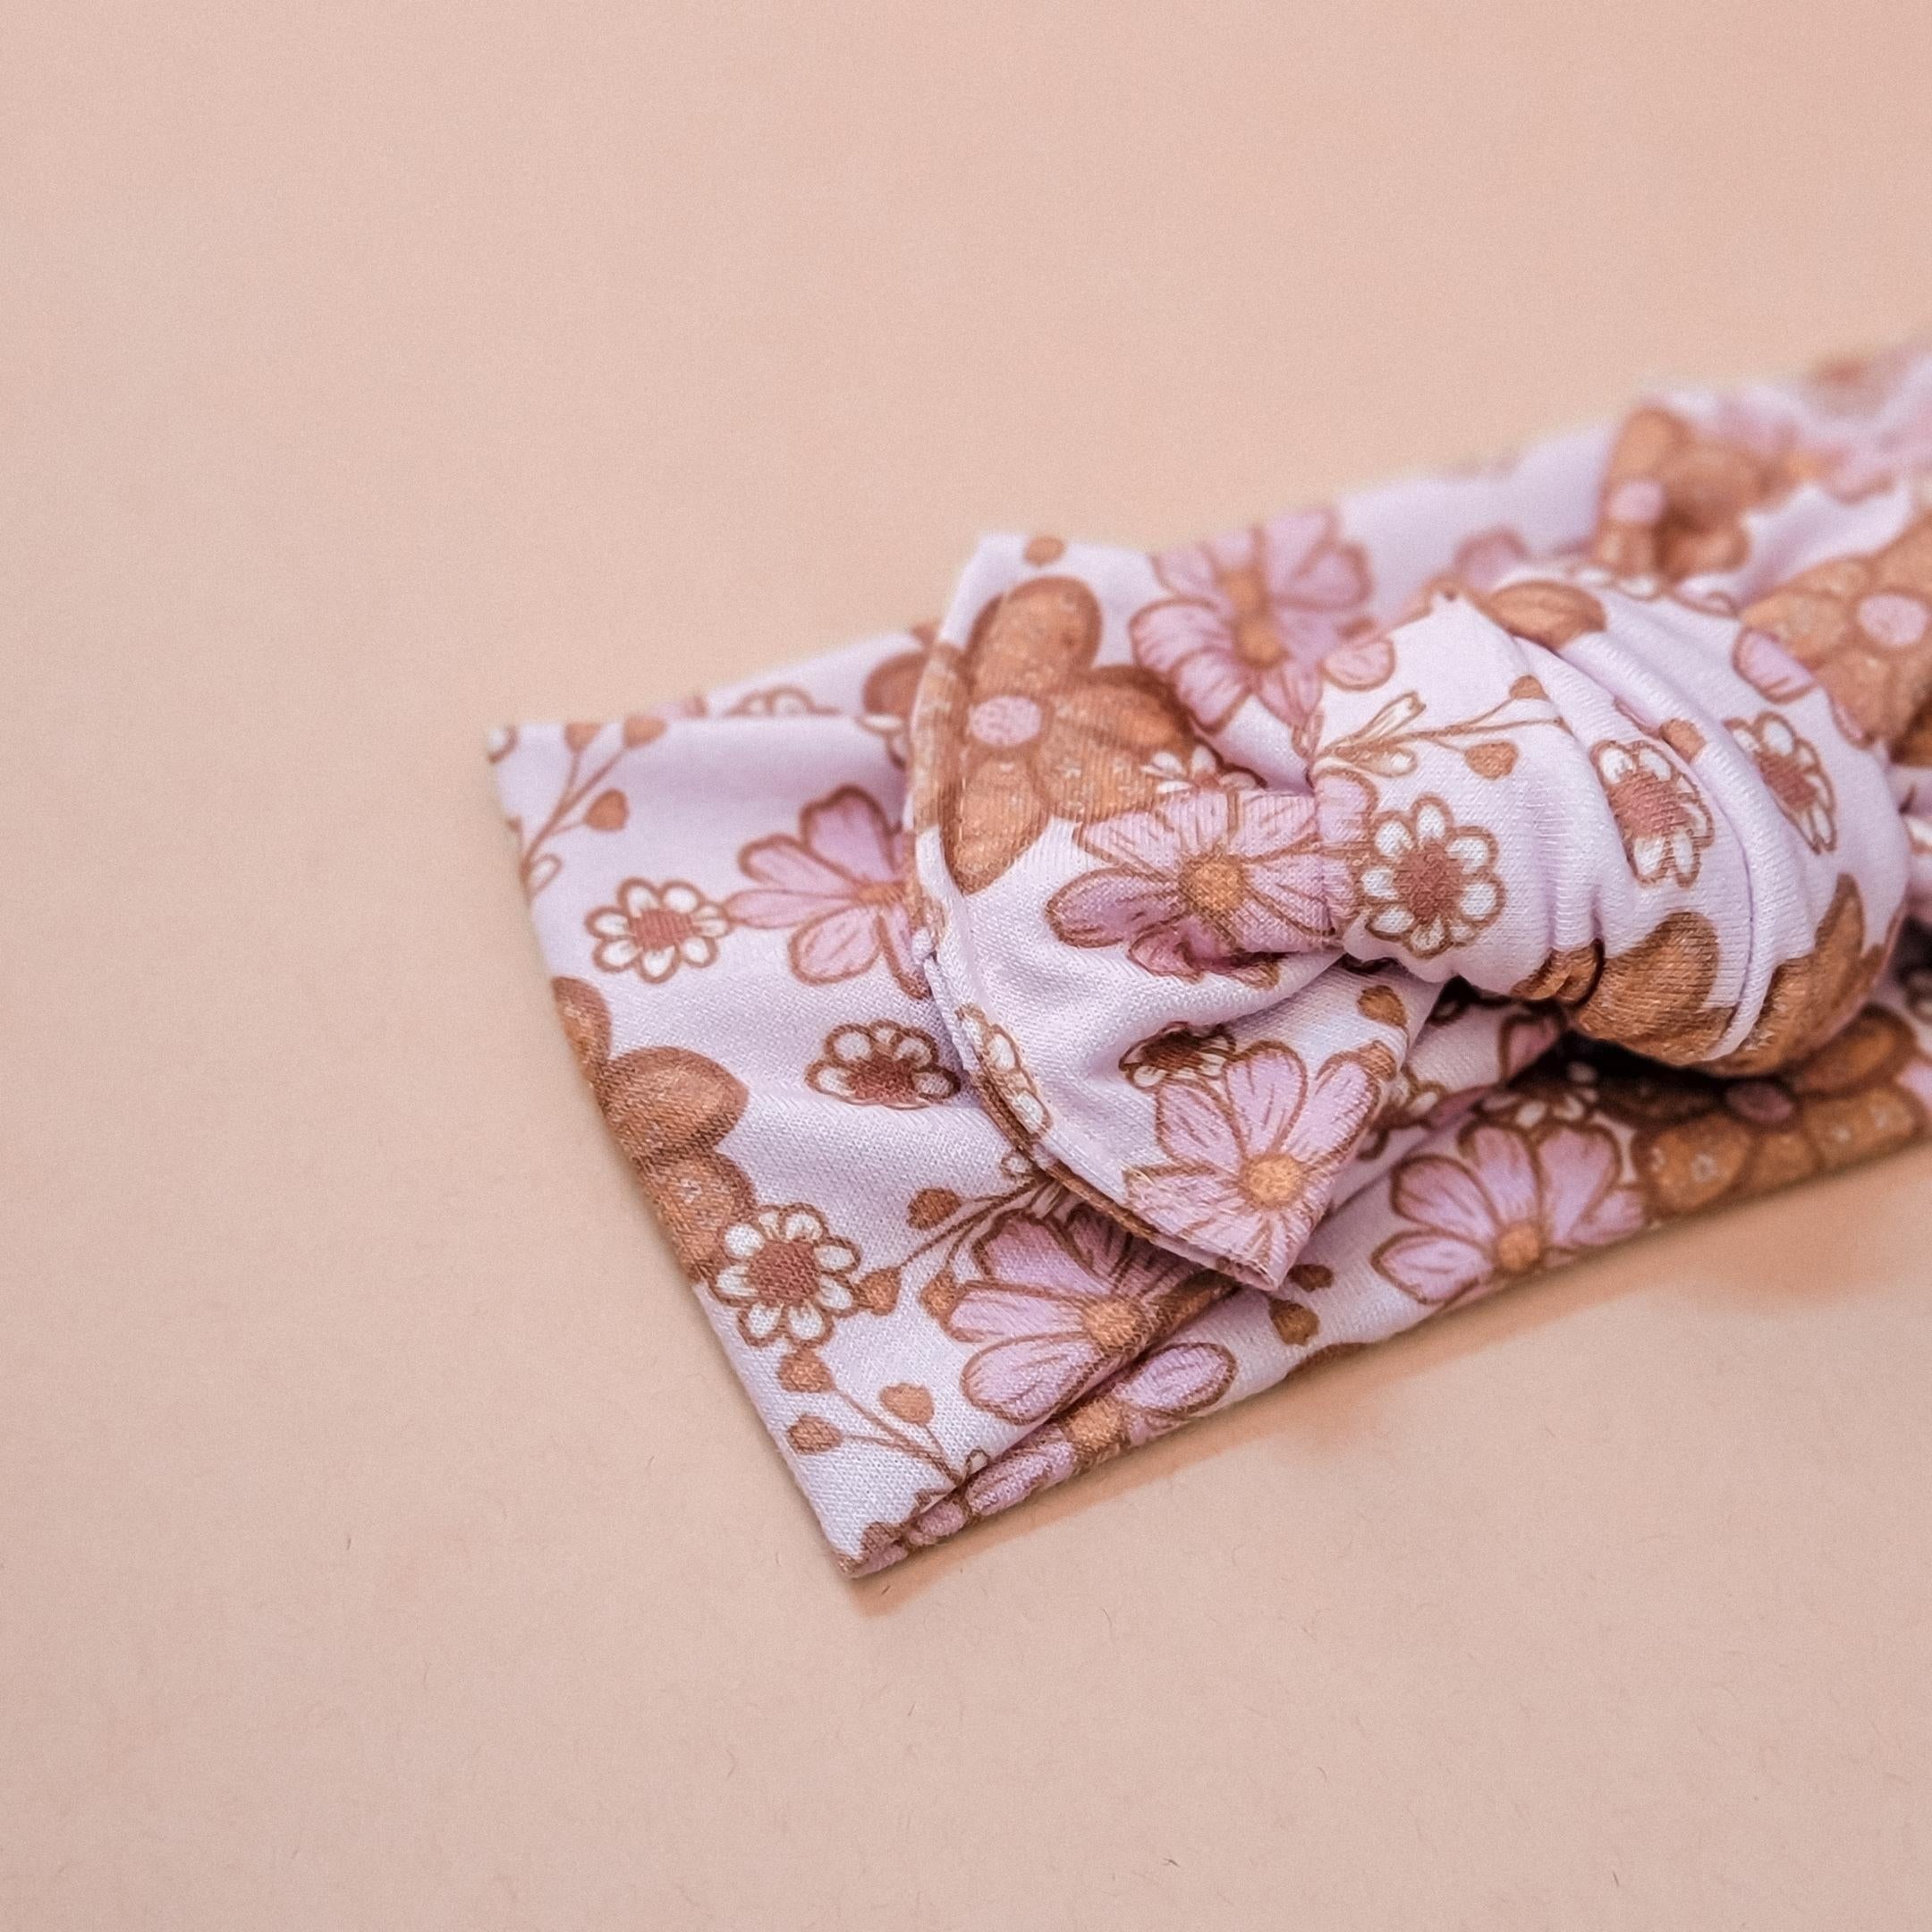 Tie-on Headwrap // Pretty Blooms Tie-on Headwraps Elisa's Little Blossoms - Headwraps 